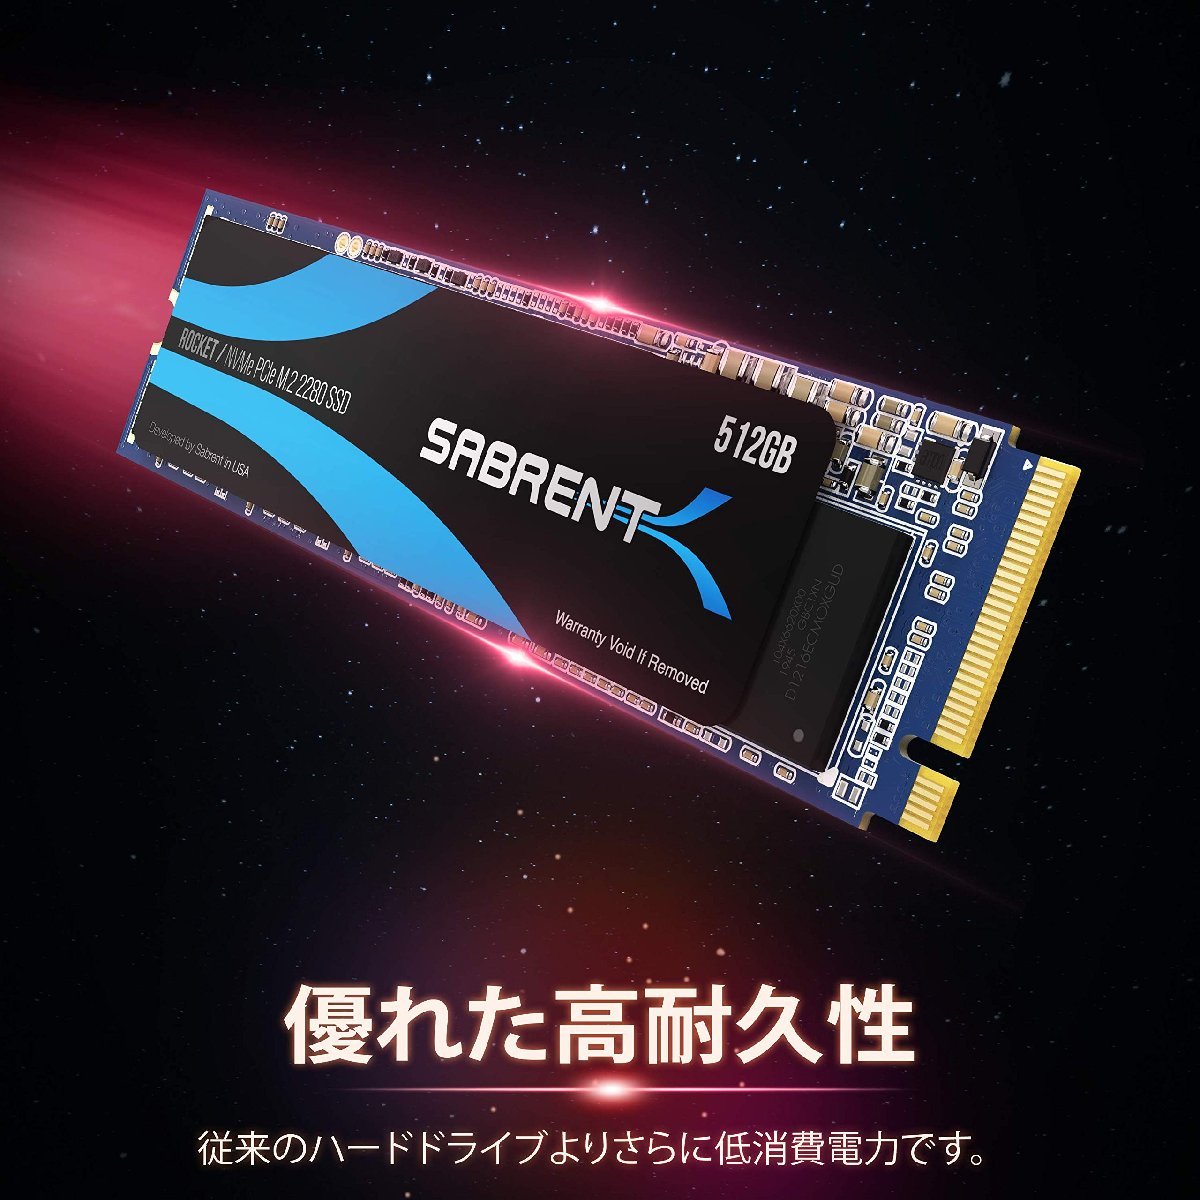 送料無料☆SABRENT SSD 512GB M.2 NVMe 512GB PCIe M.2 2280 内蔵SSD